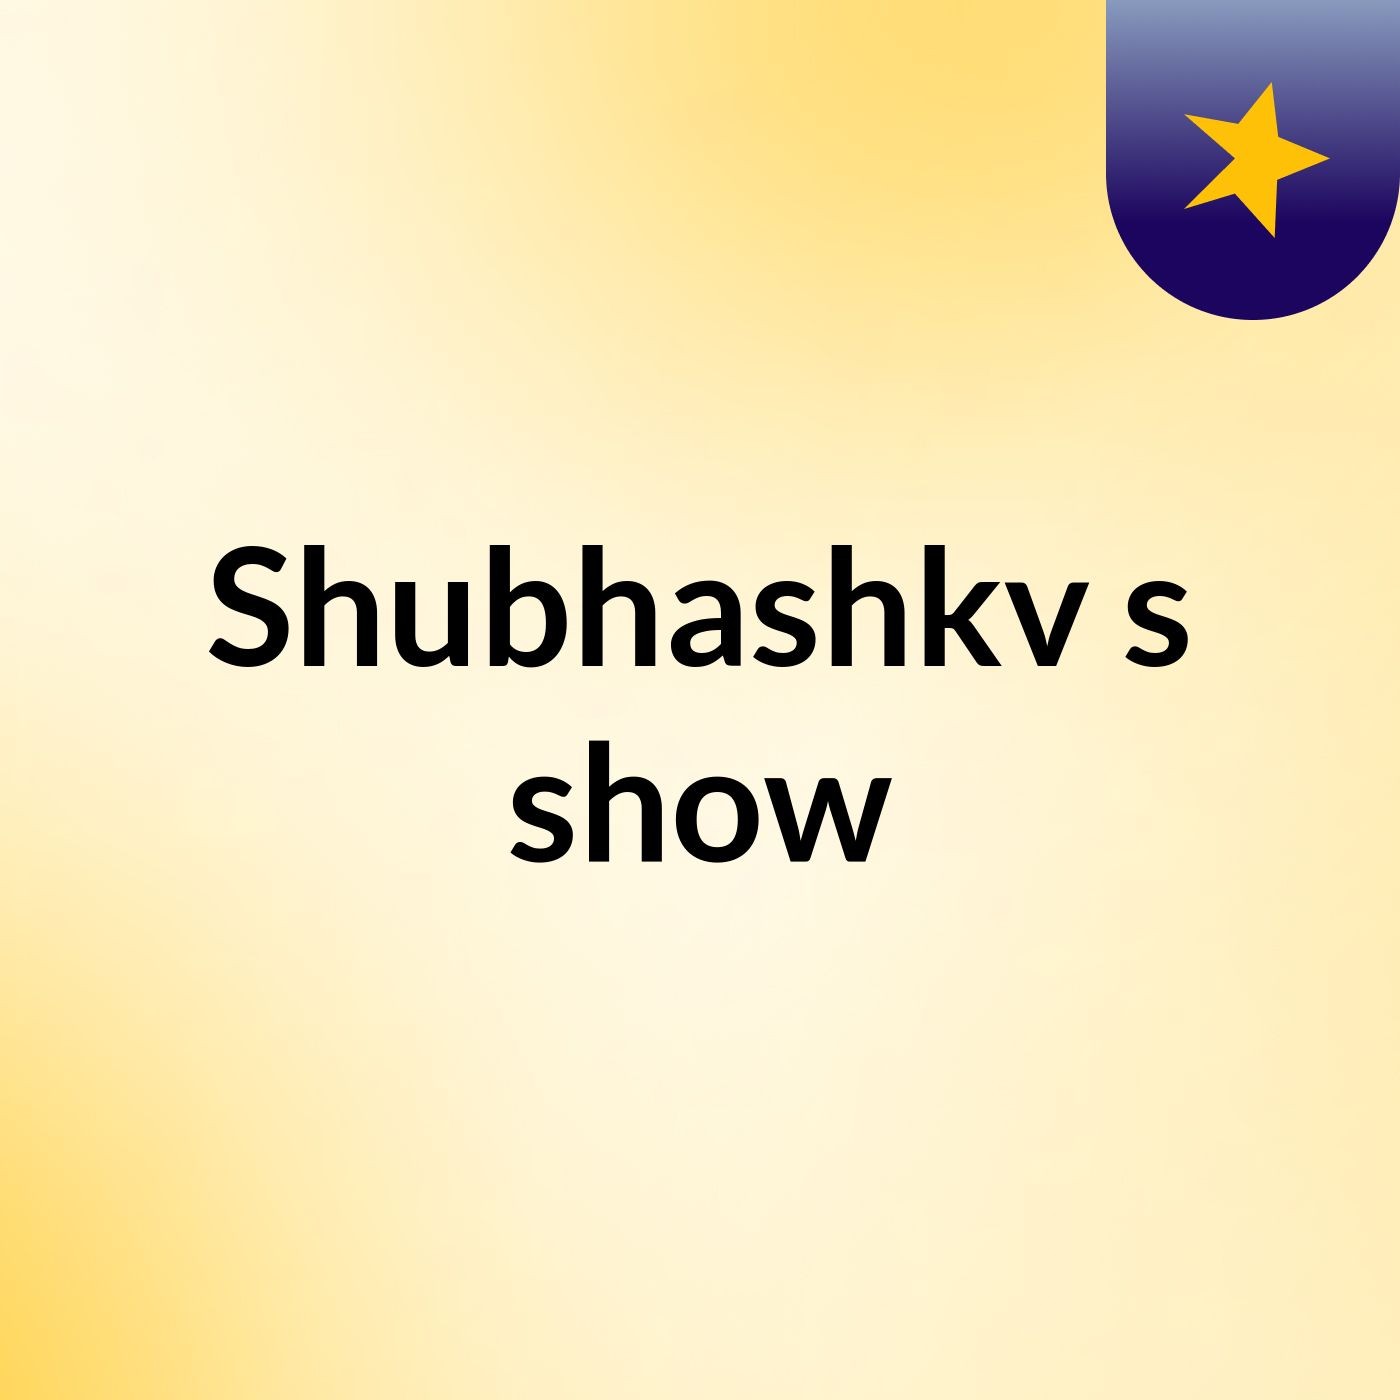 Shubhashkv's show